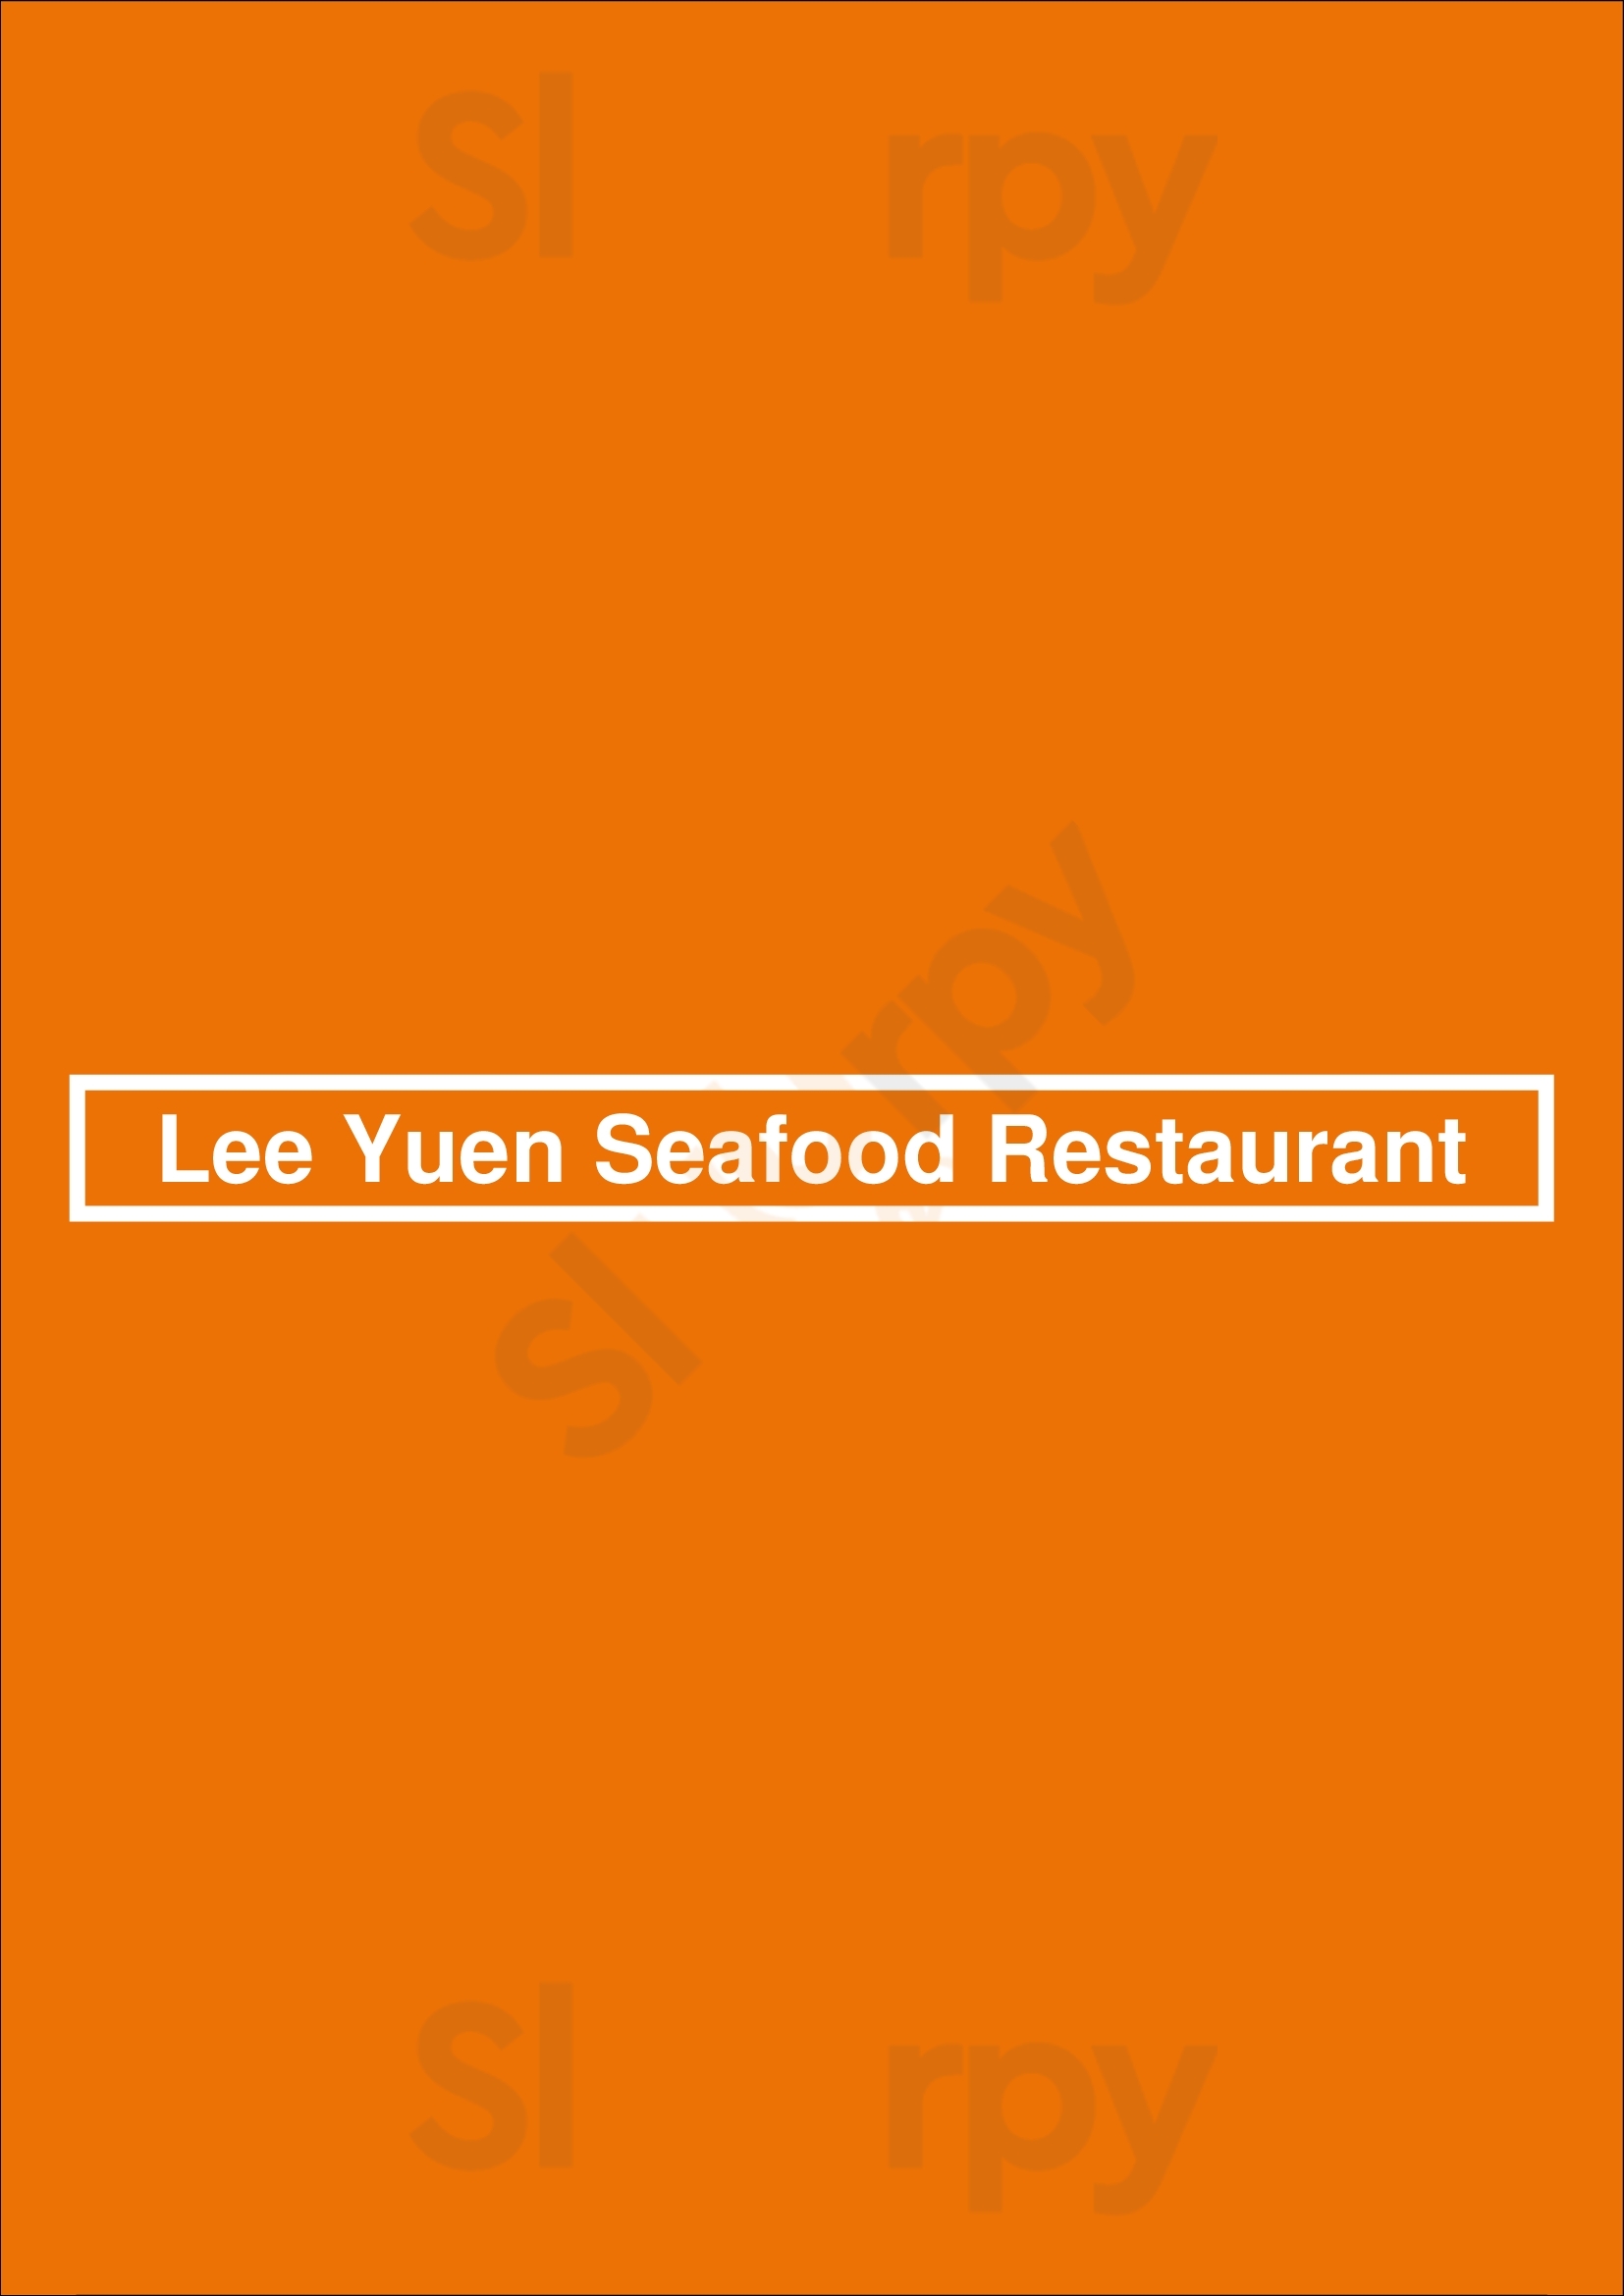 Lee Yuen Seafood Restaurant Surrey Menu - 1